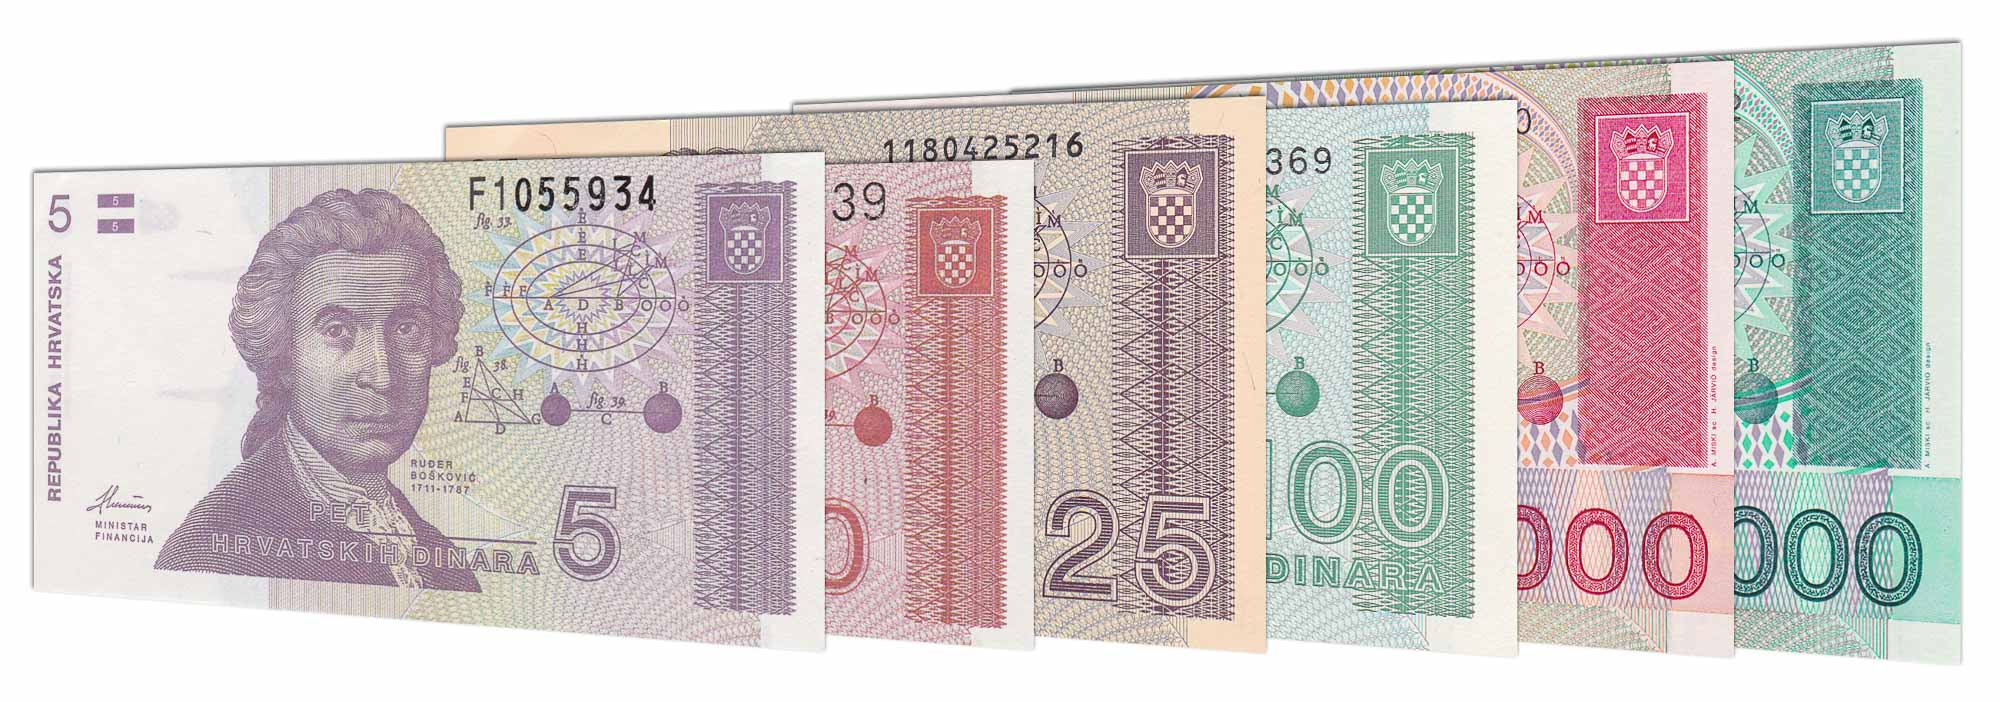 Obsolete Croatian Dinara banknotes